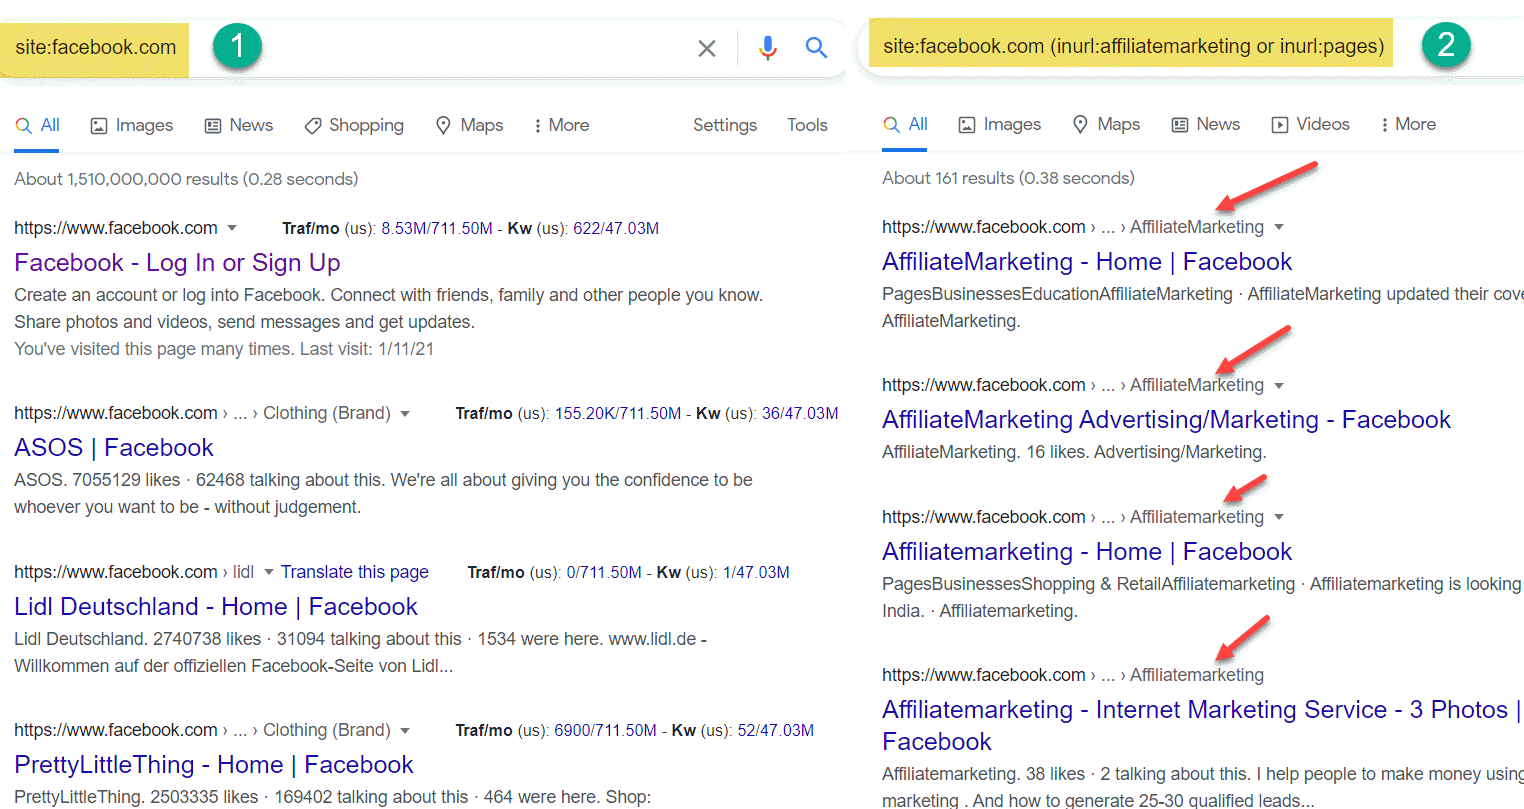 google site search using inurl